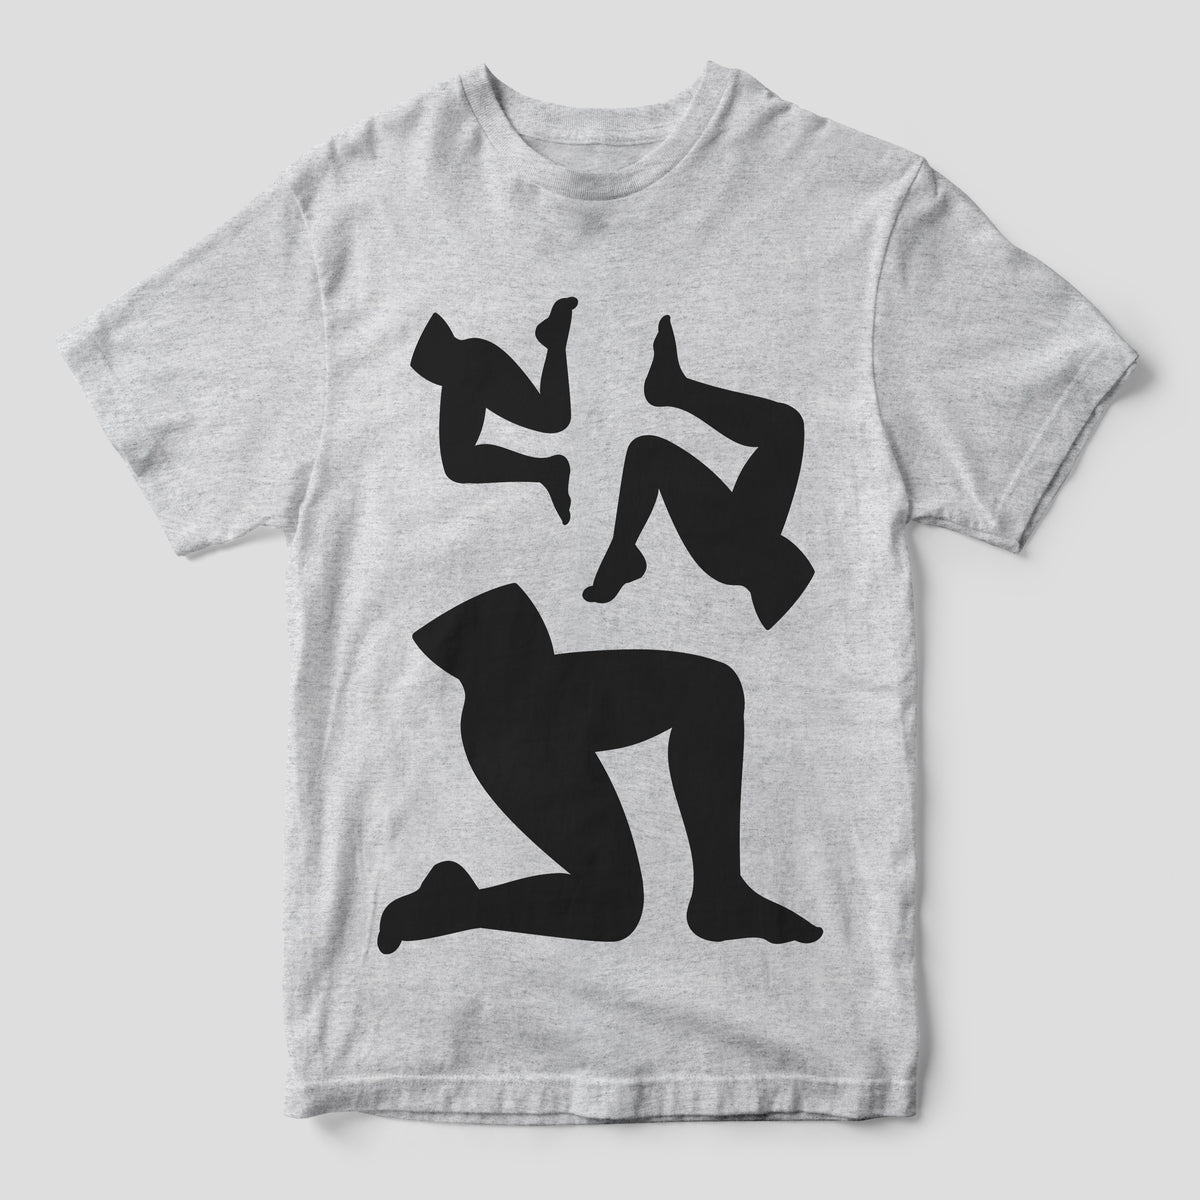 Legs - Ash Grey T-shirt